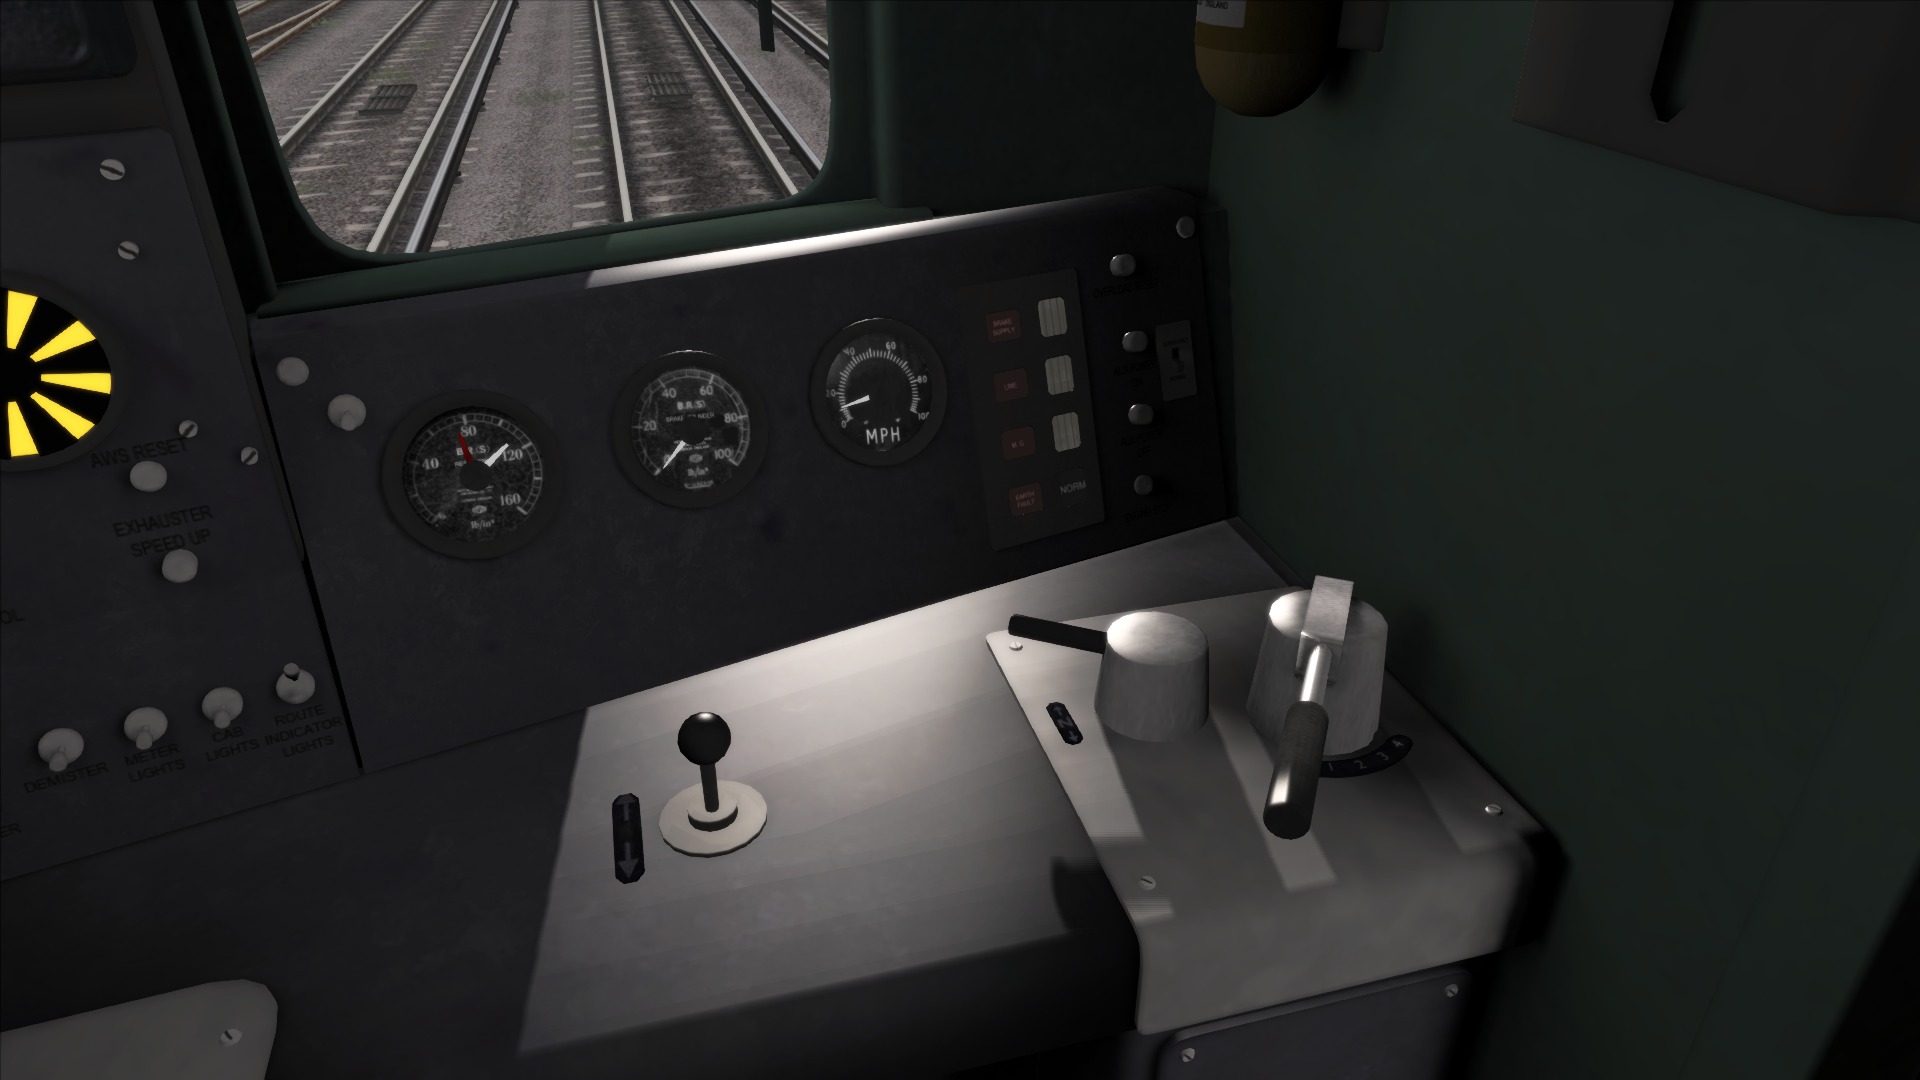 Train Simulator: BR Class 423 ‘4VEP’ EMU Add-On screenshot